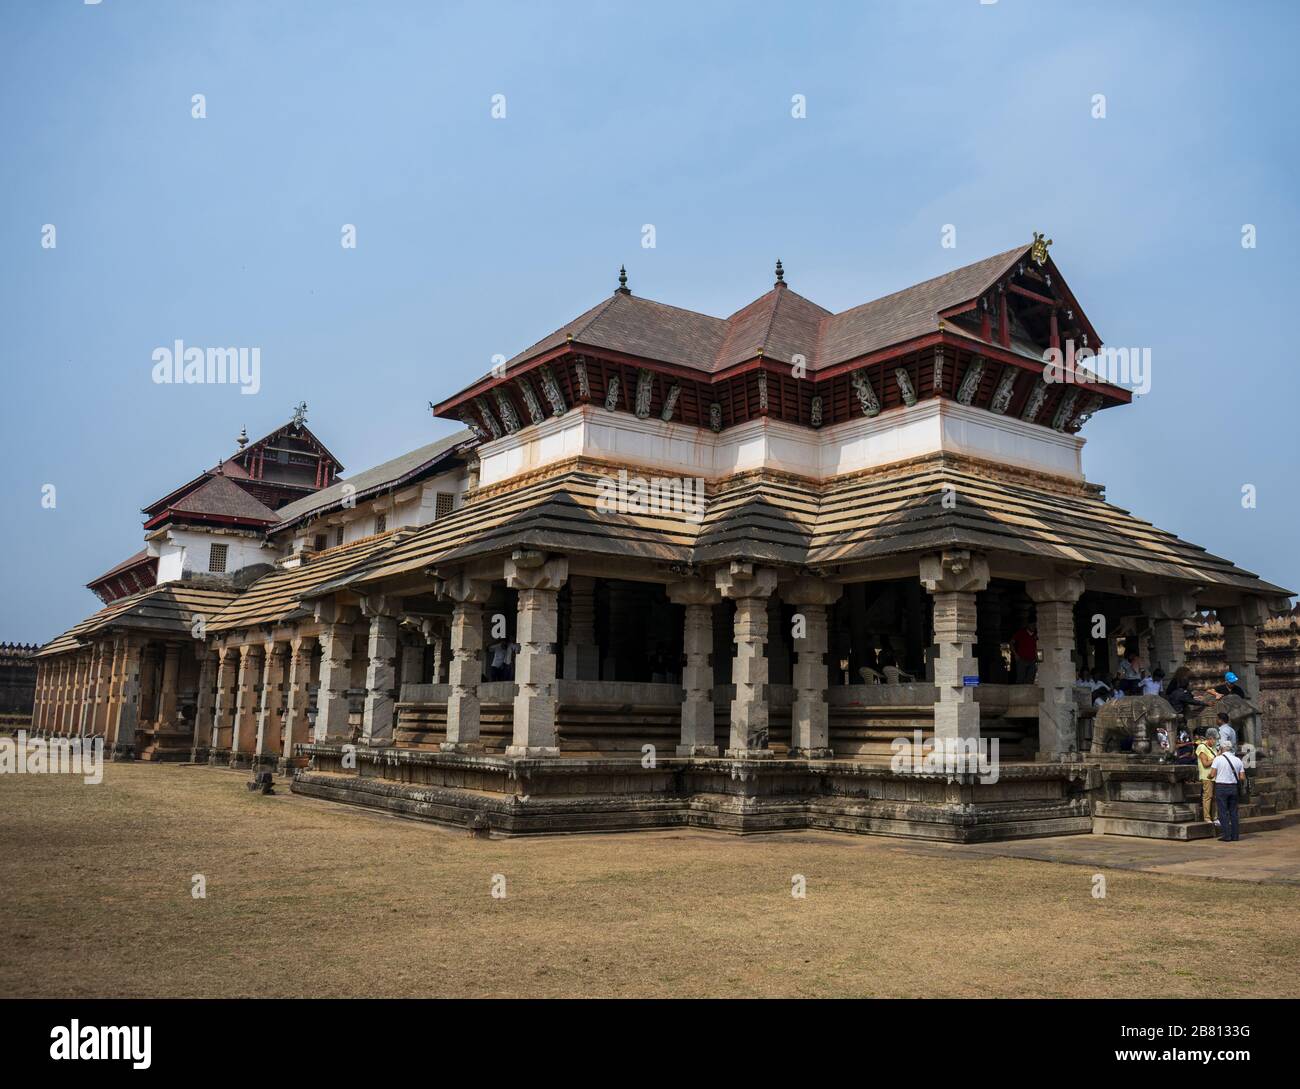 India, Karnataka, New Mangalore - December 30 2019 - The Jain temple of Moodbidri Stock Photo